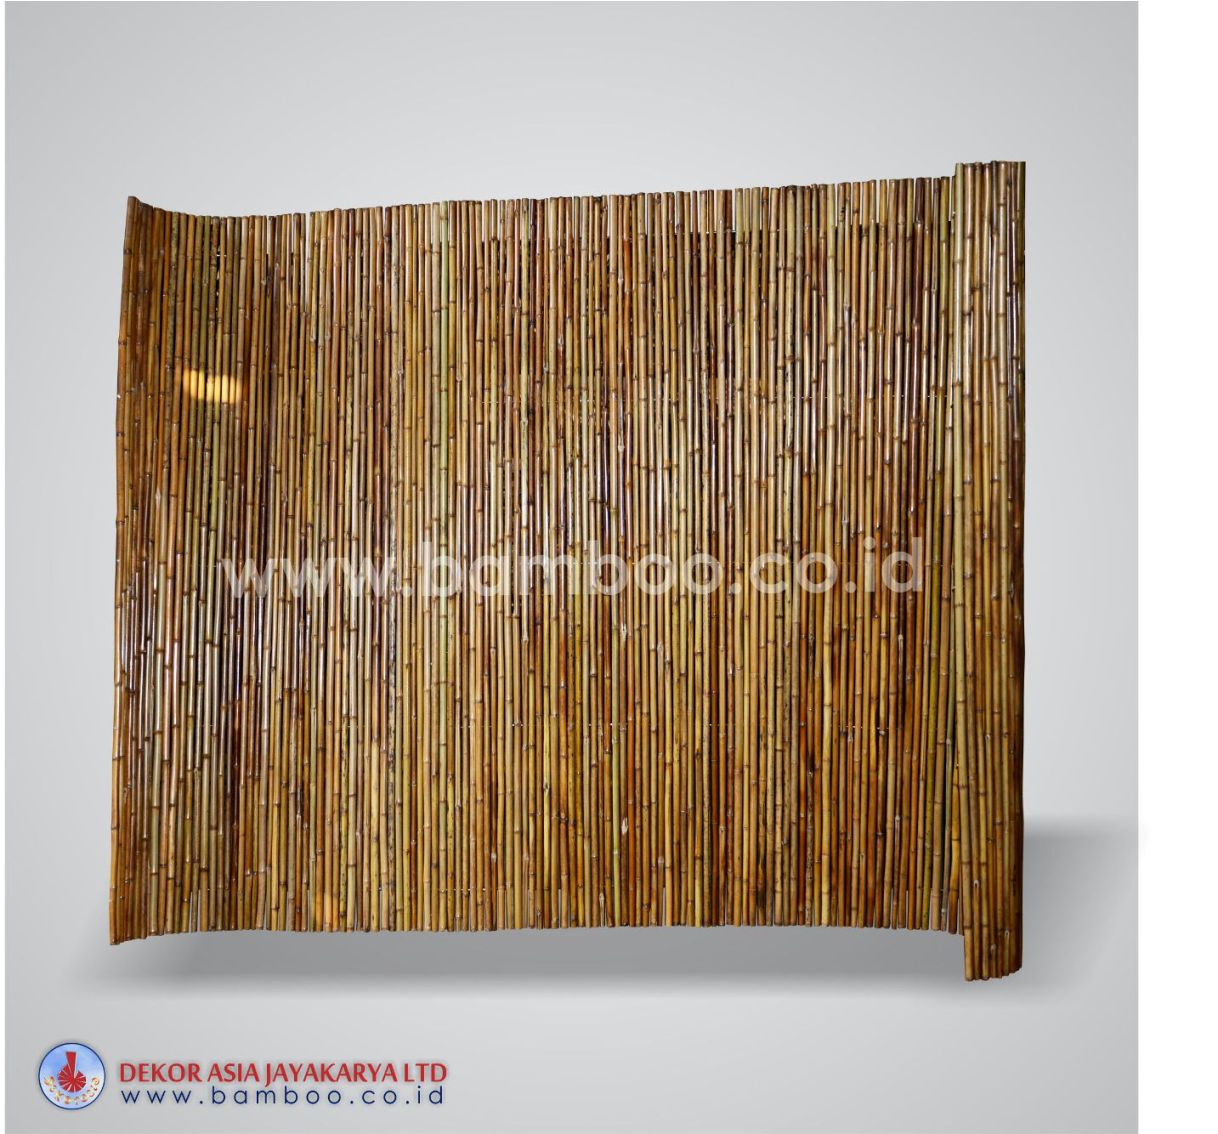 Full Roll Of Bamboo Cendani